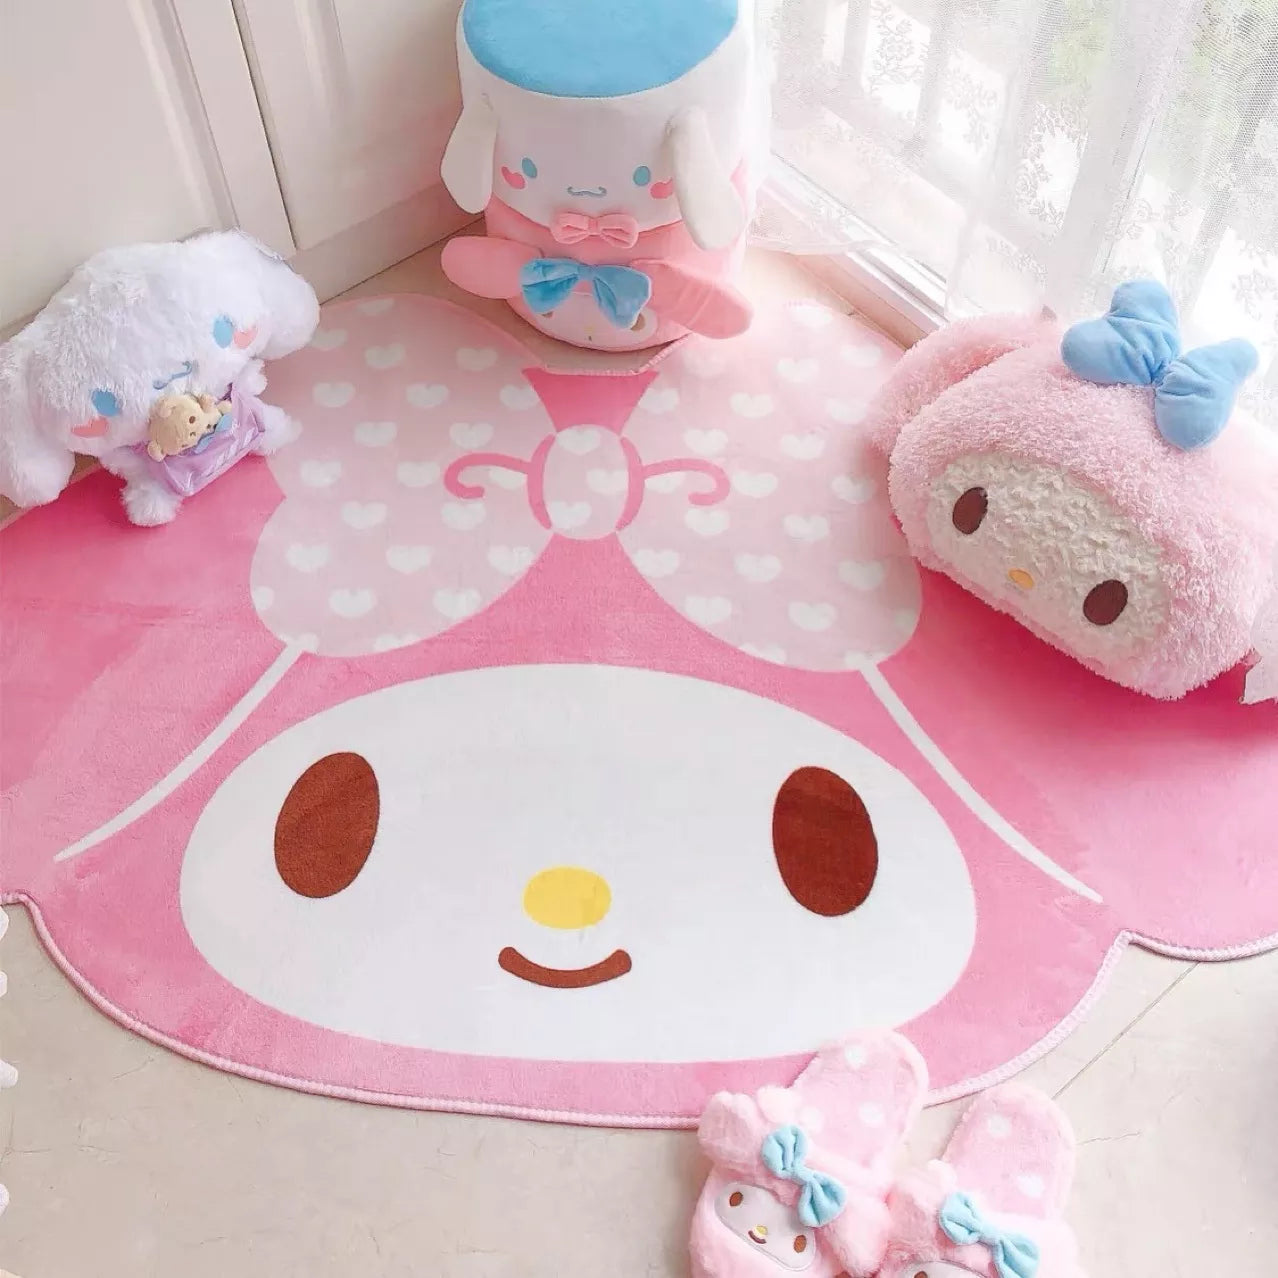 100x150CM Cartoon Saniro My Melody Carpet Kawaii Home Soft Fur Rugs Children Girls Bedroom Living Room Floor Mat Doormat Decor